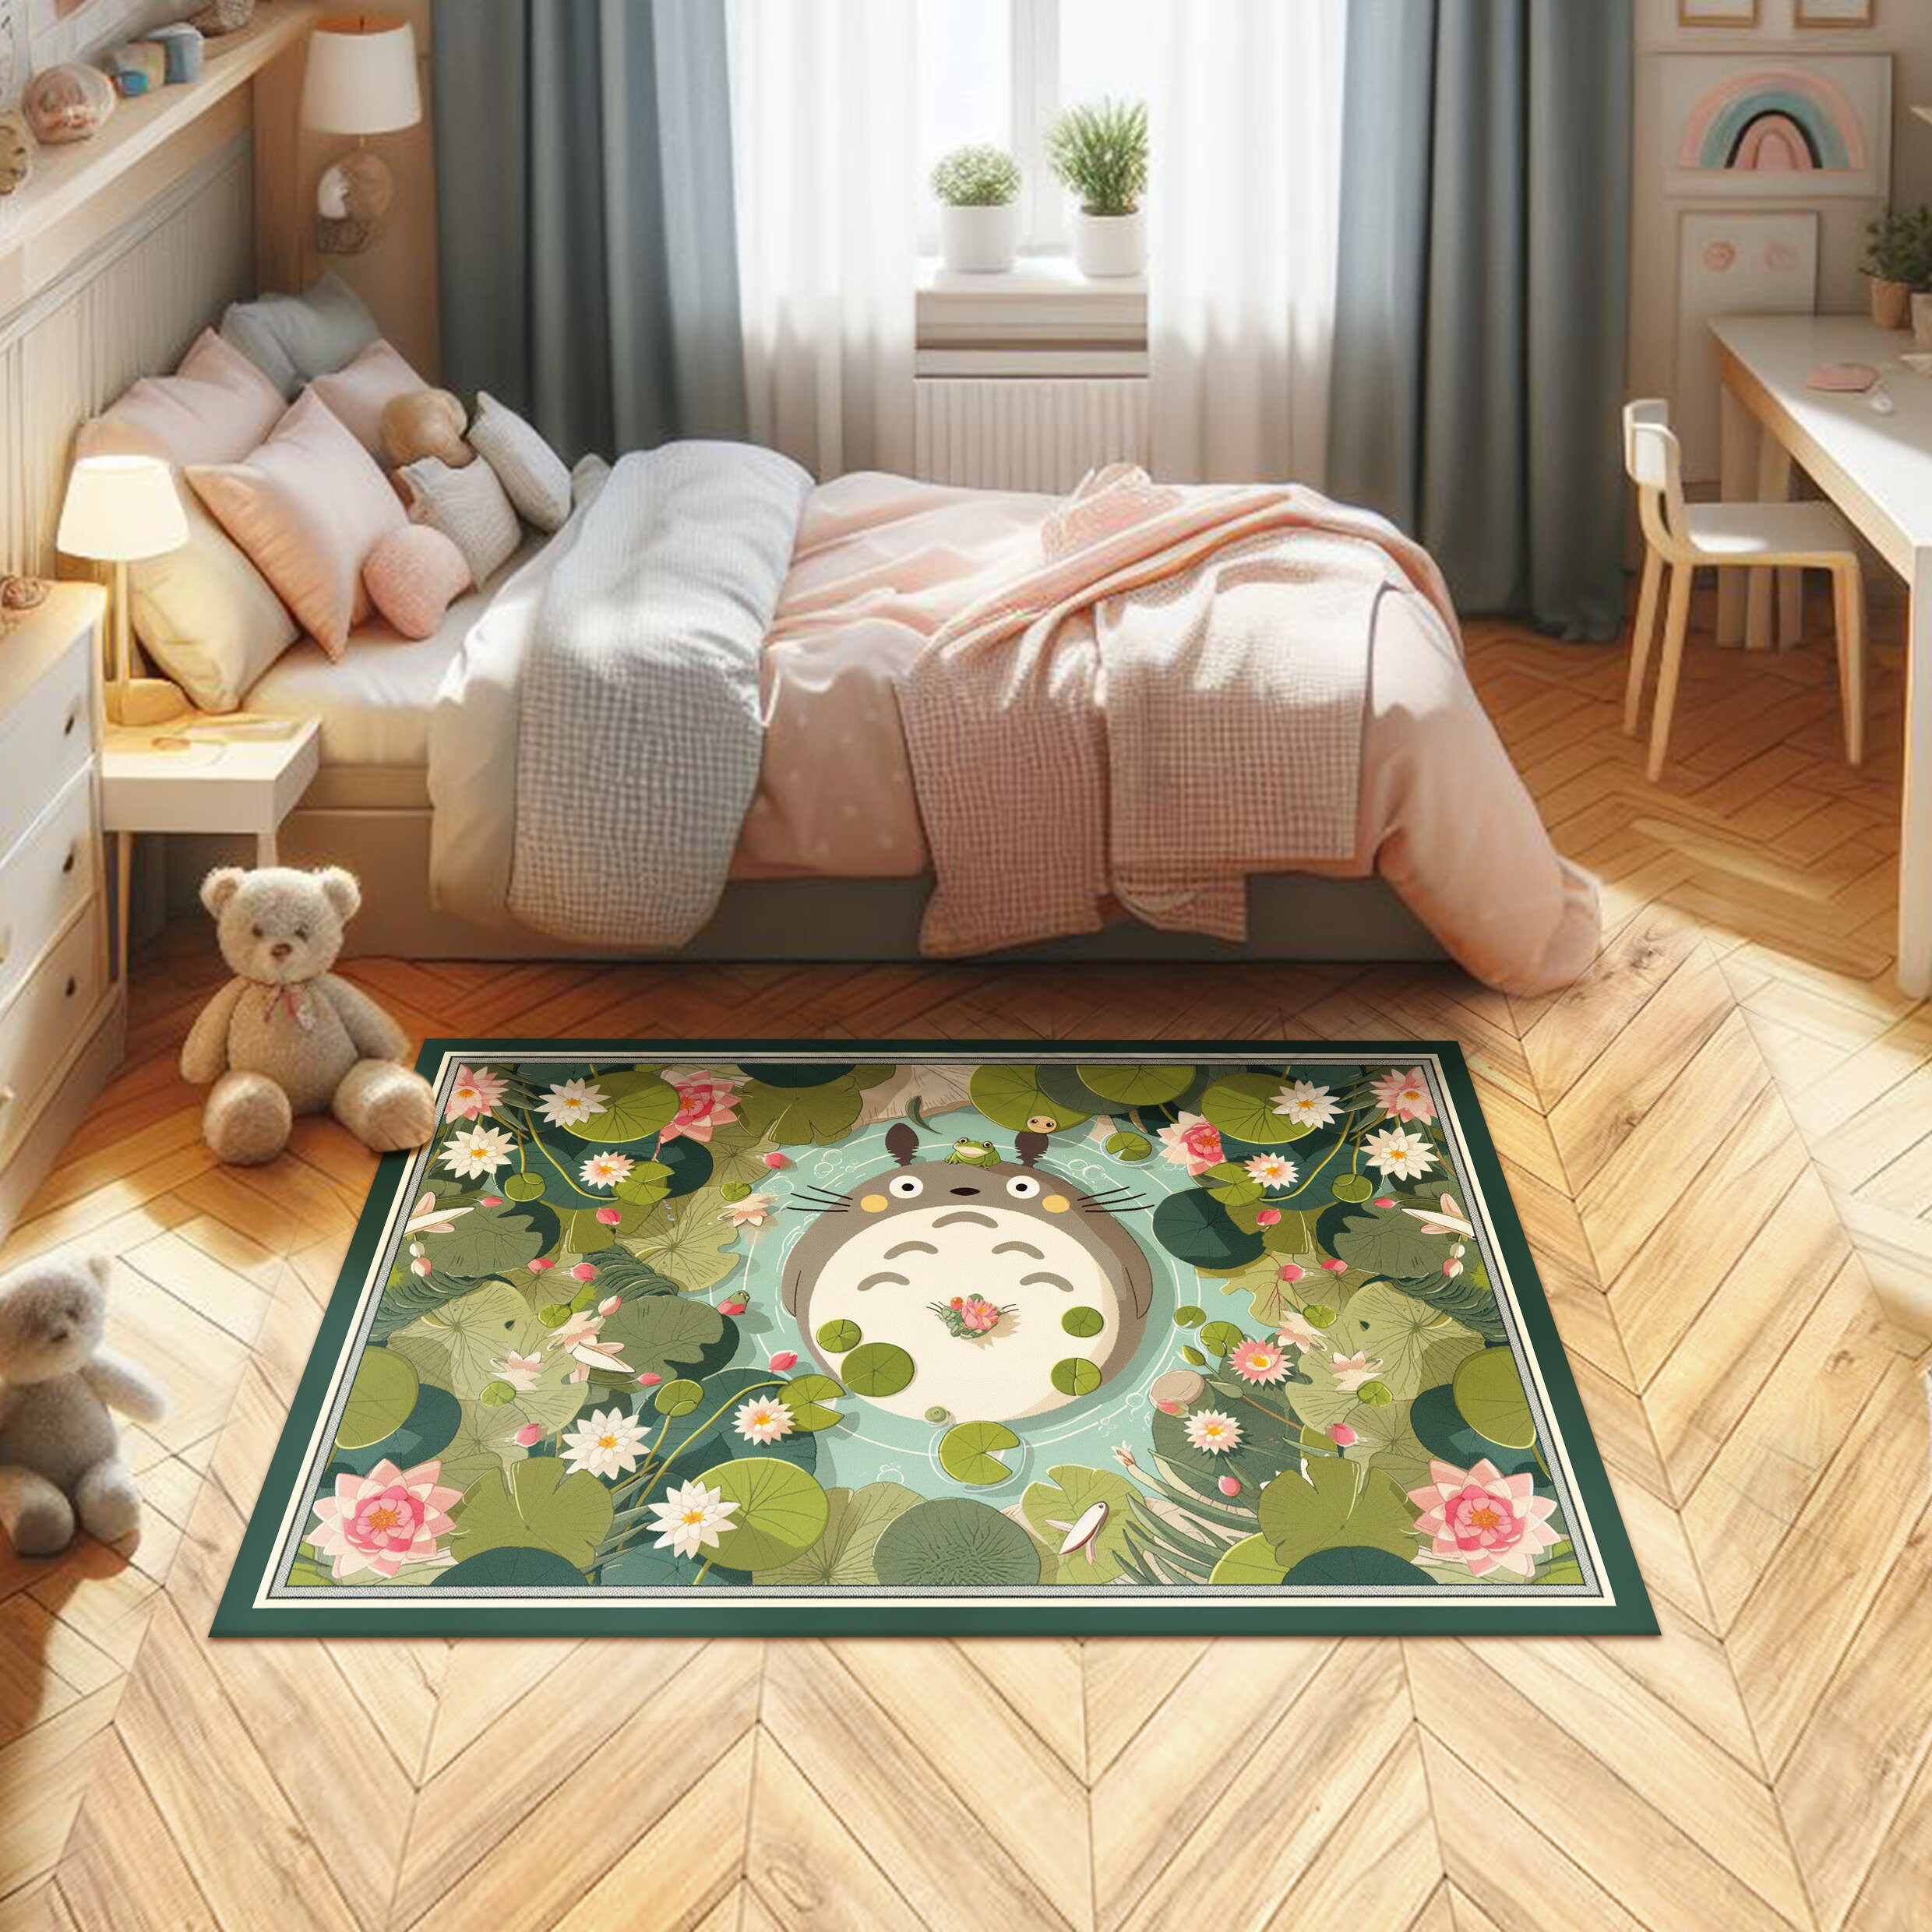 Discover Totorro Kids Rugs, Rugs design, Kids Rugs, Anime rugs, Anime design rugs, Anime carpet